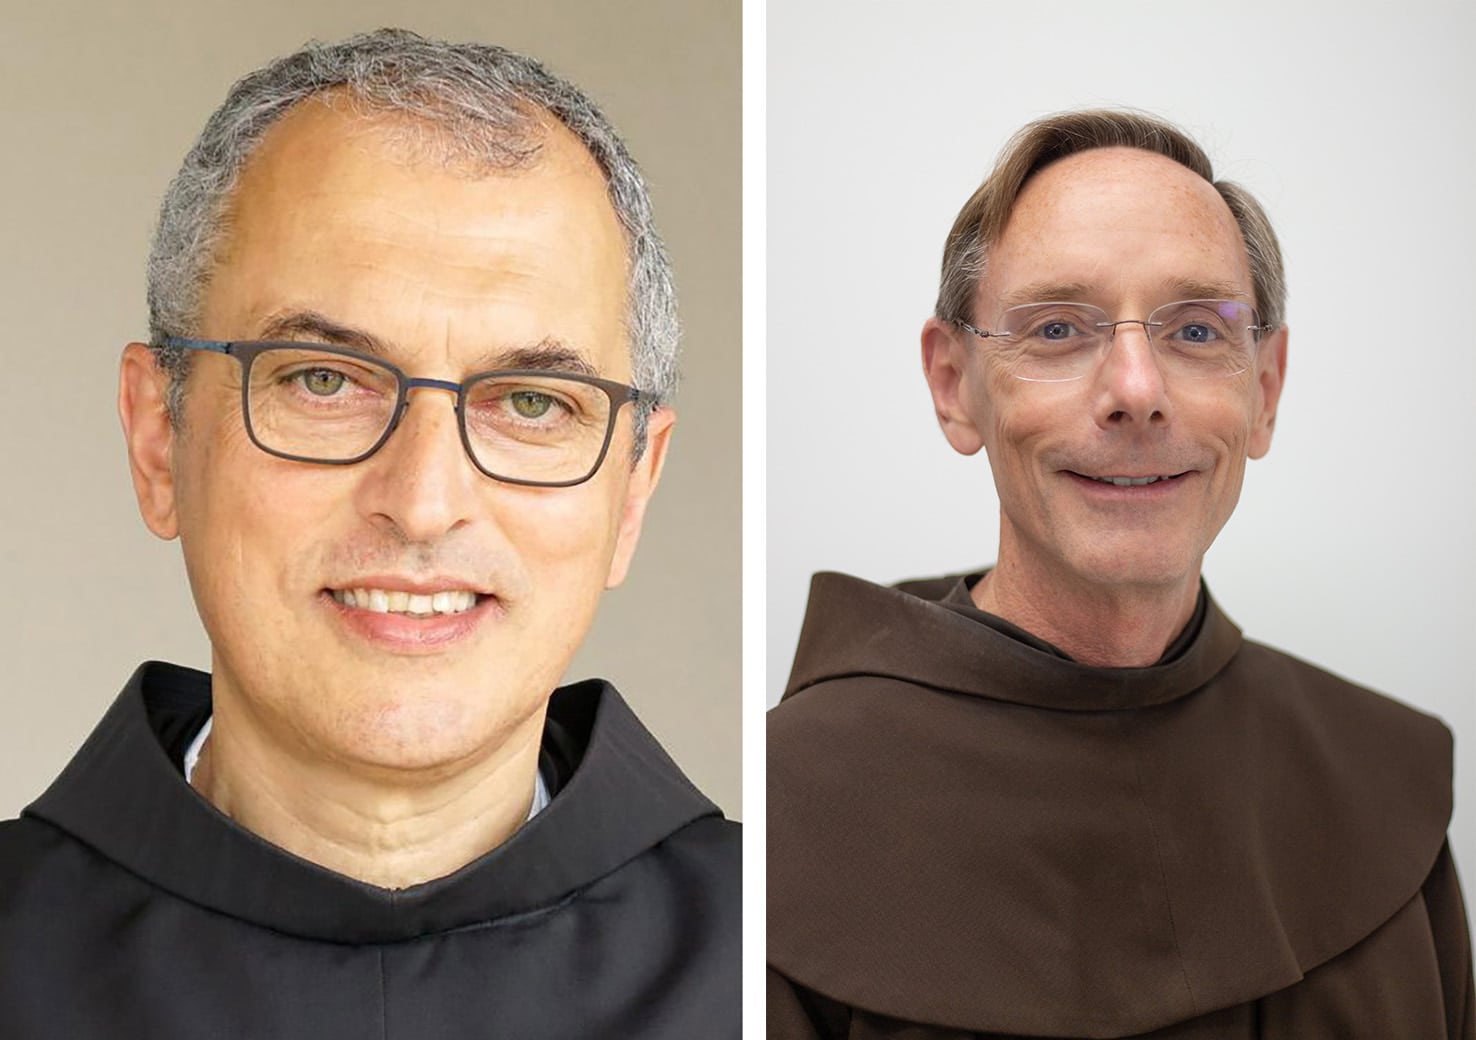 Franciscan friars